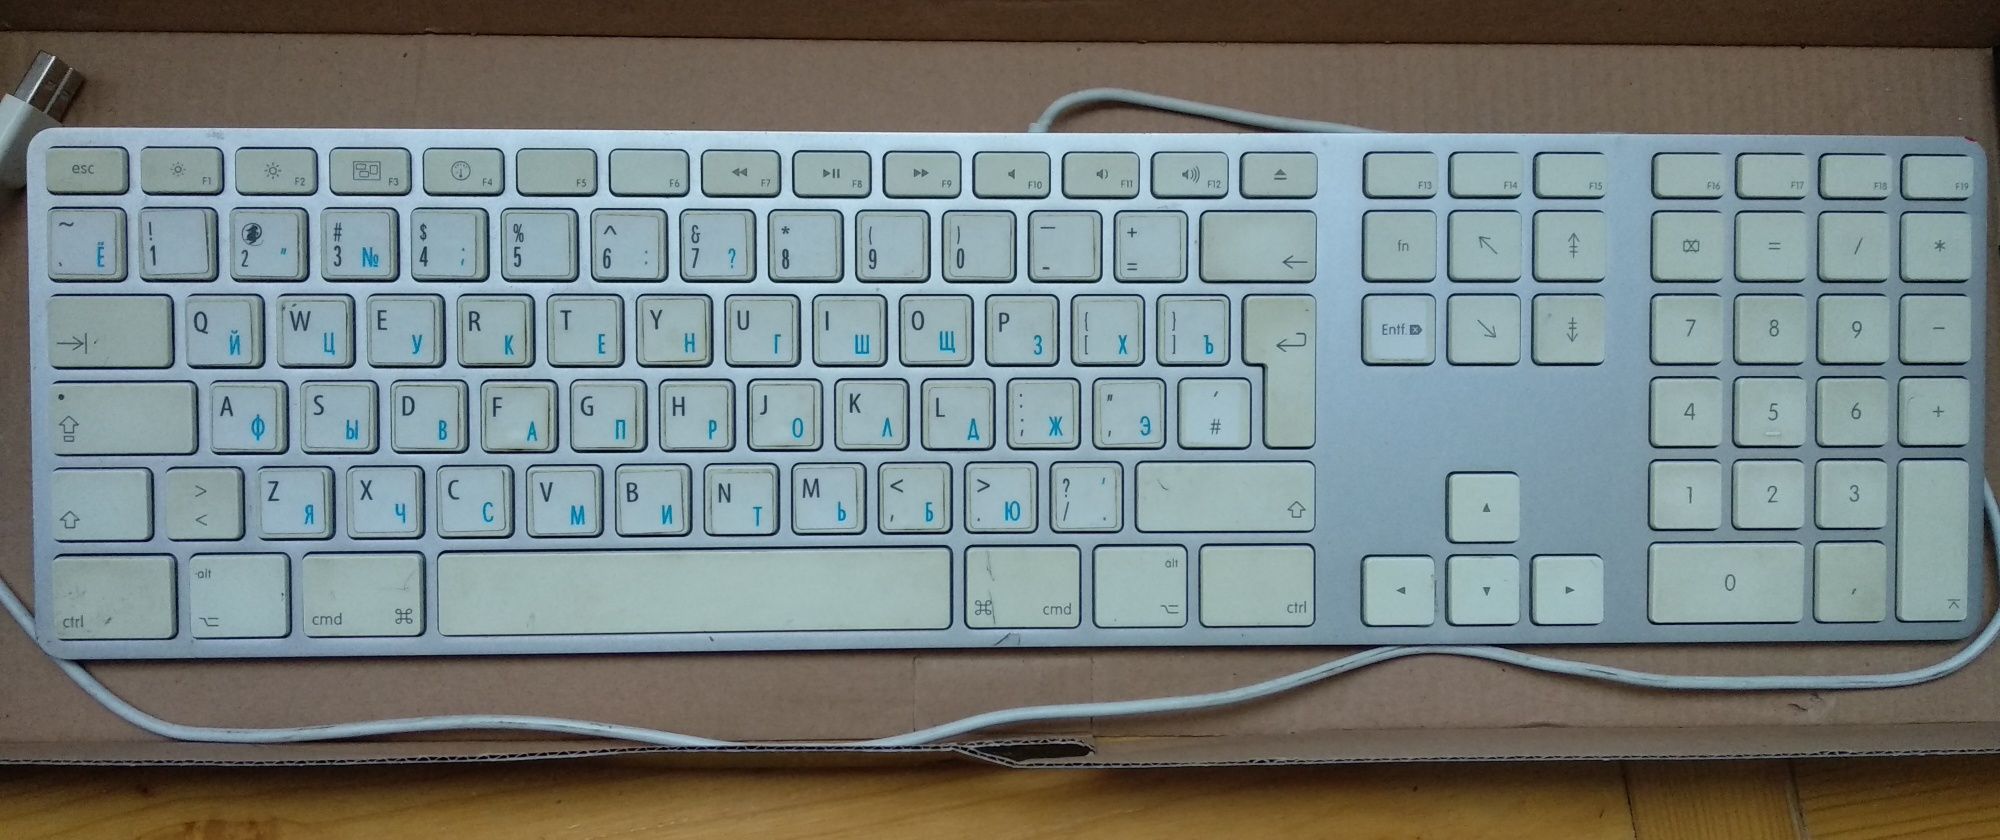 Клавіатура Apple A1243